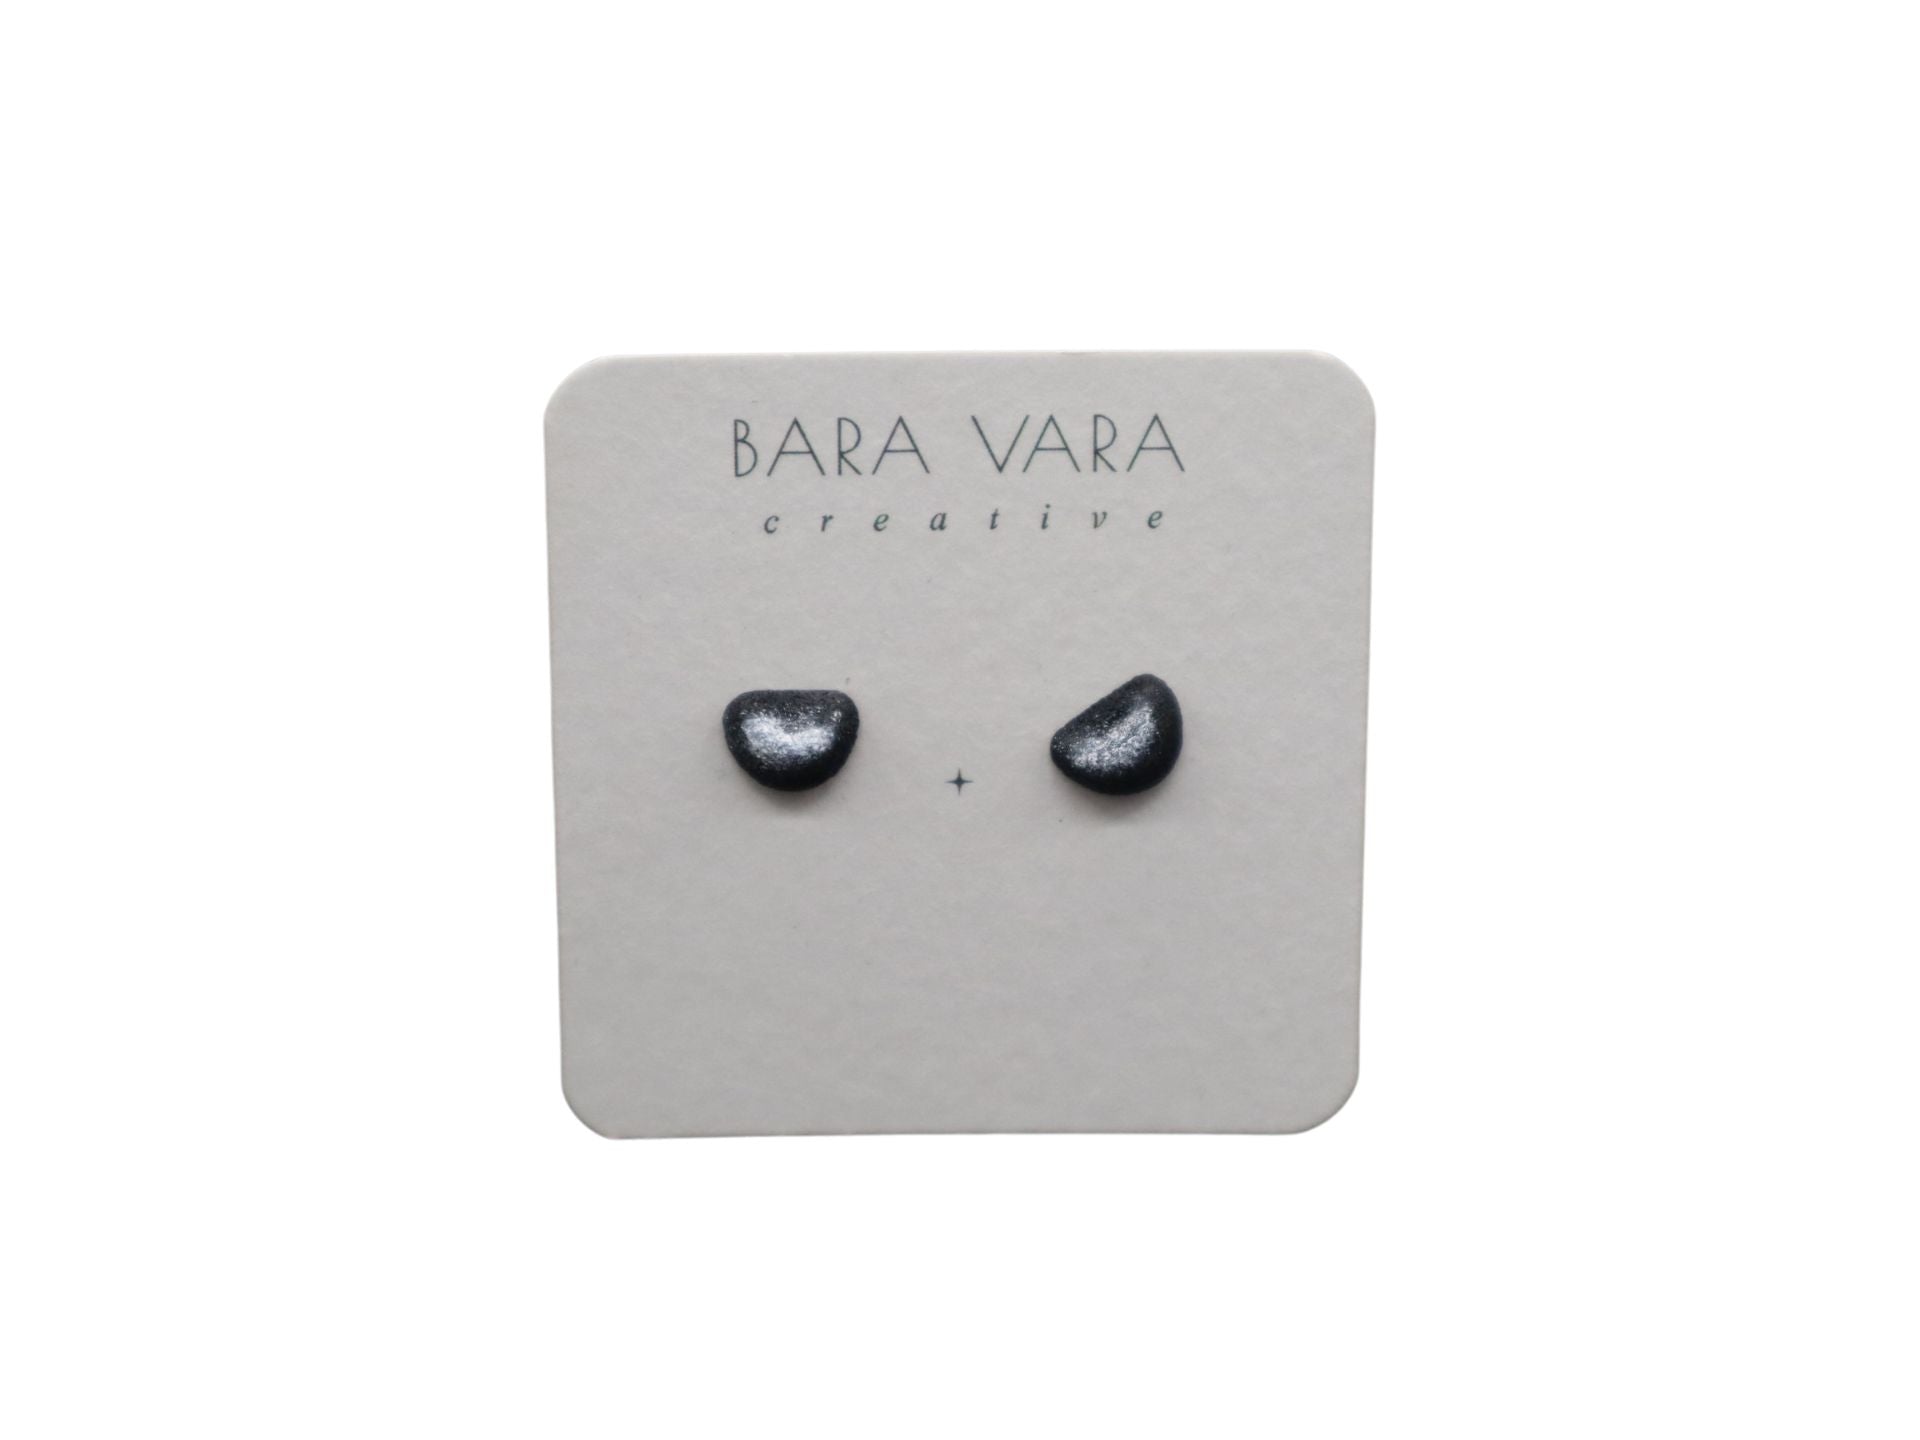 Bara Vara Creative Earrings - Black Sloper - Happy Biner